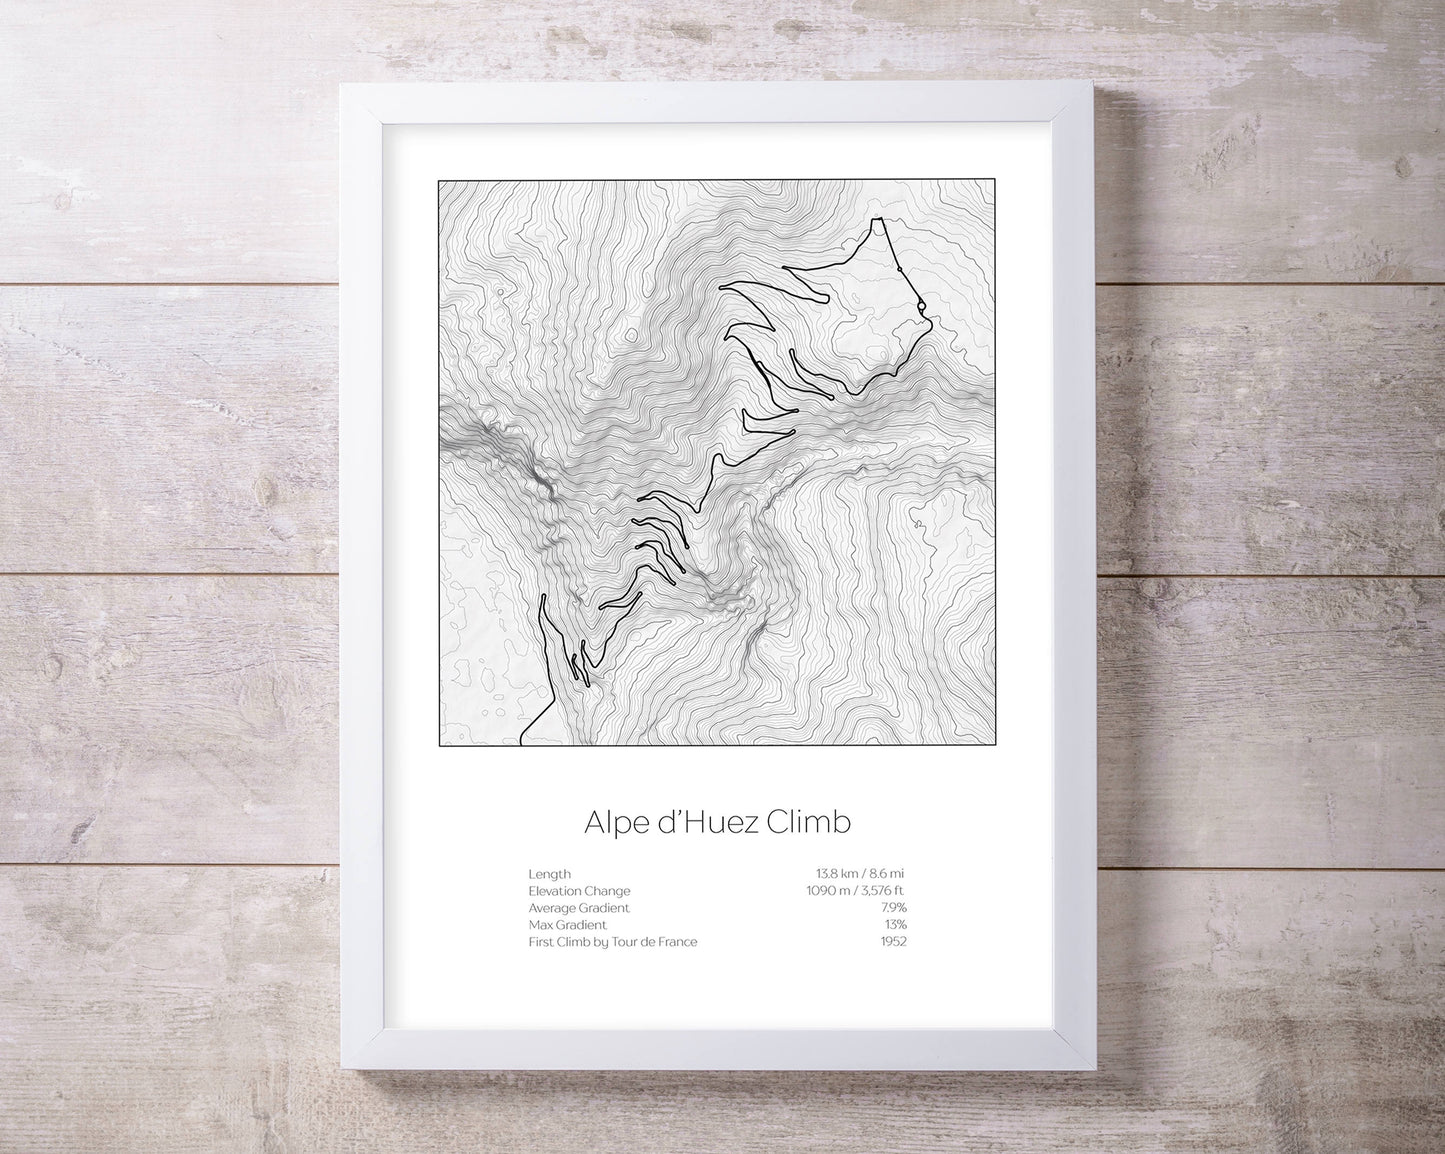 Alpe d'Huez climb, Tour de France Bike raceTopography Elevation Print Wall Art